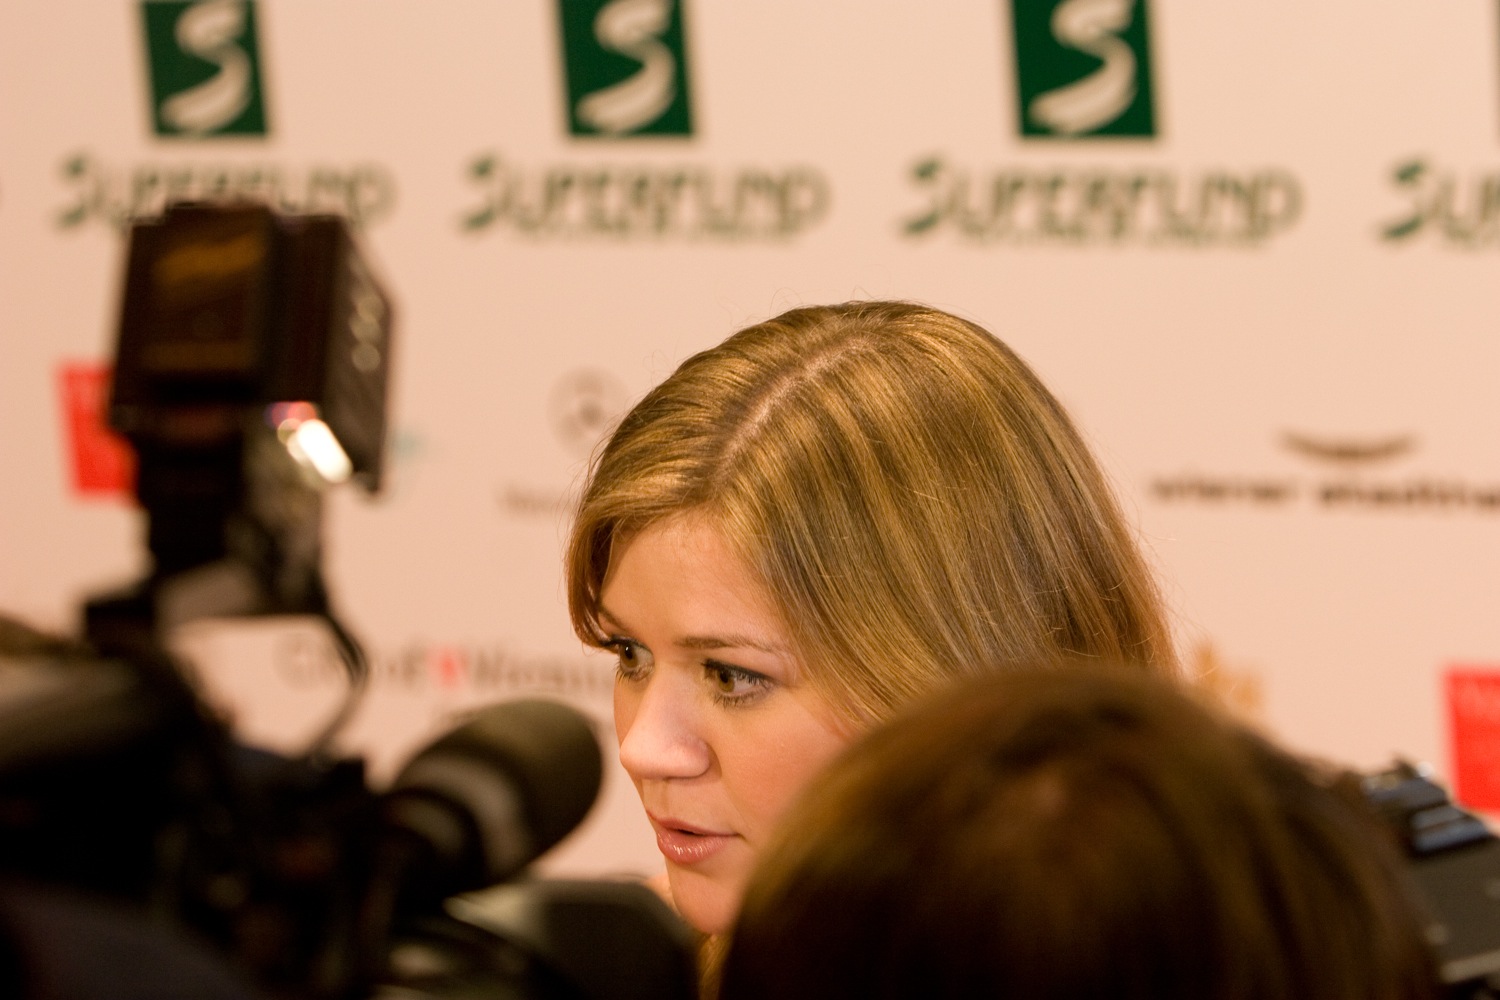 Women's World Awards 2009